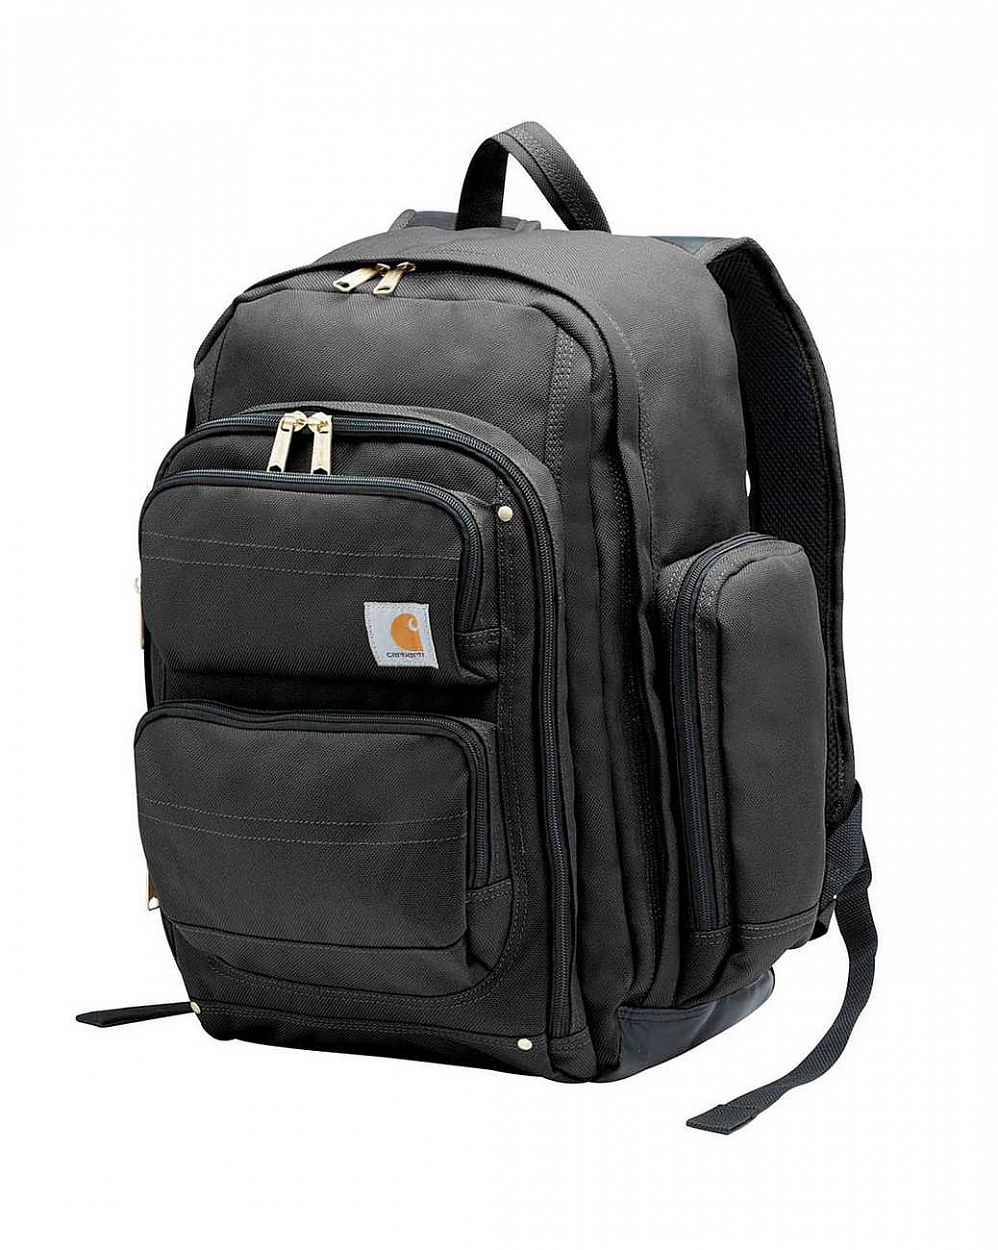 Рюкзак Carhartt USA Deluxe Daypack Backpack Black отзывы